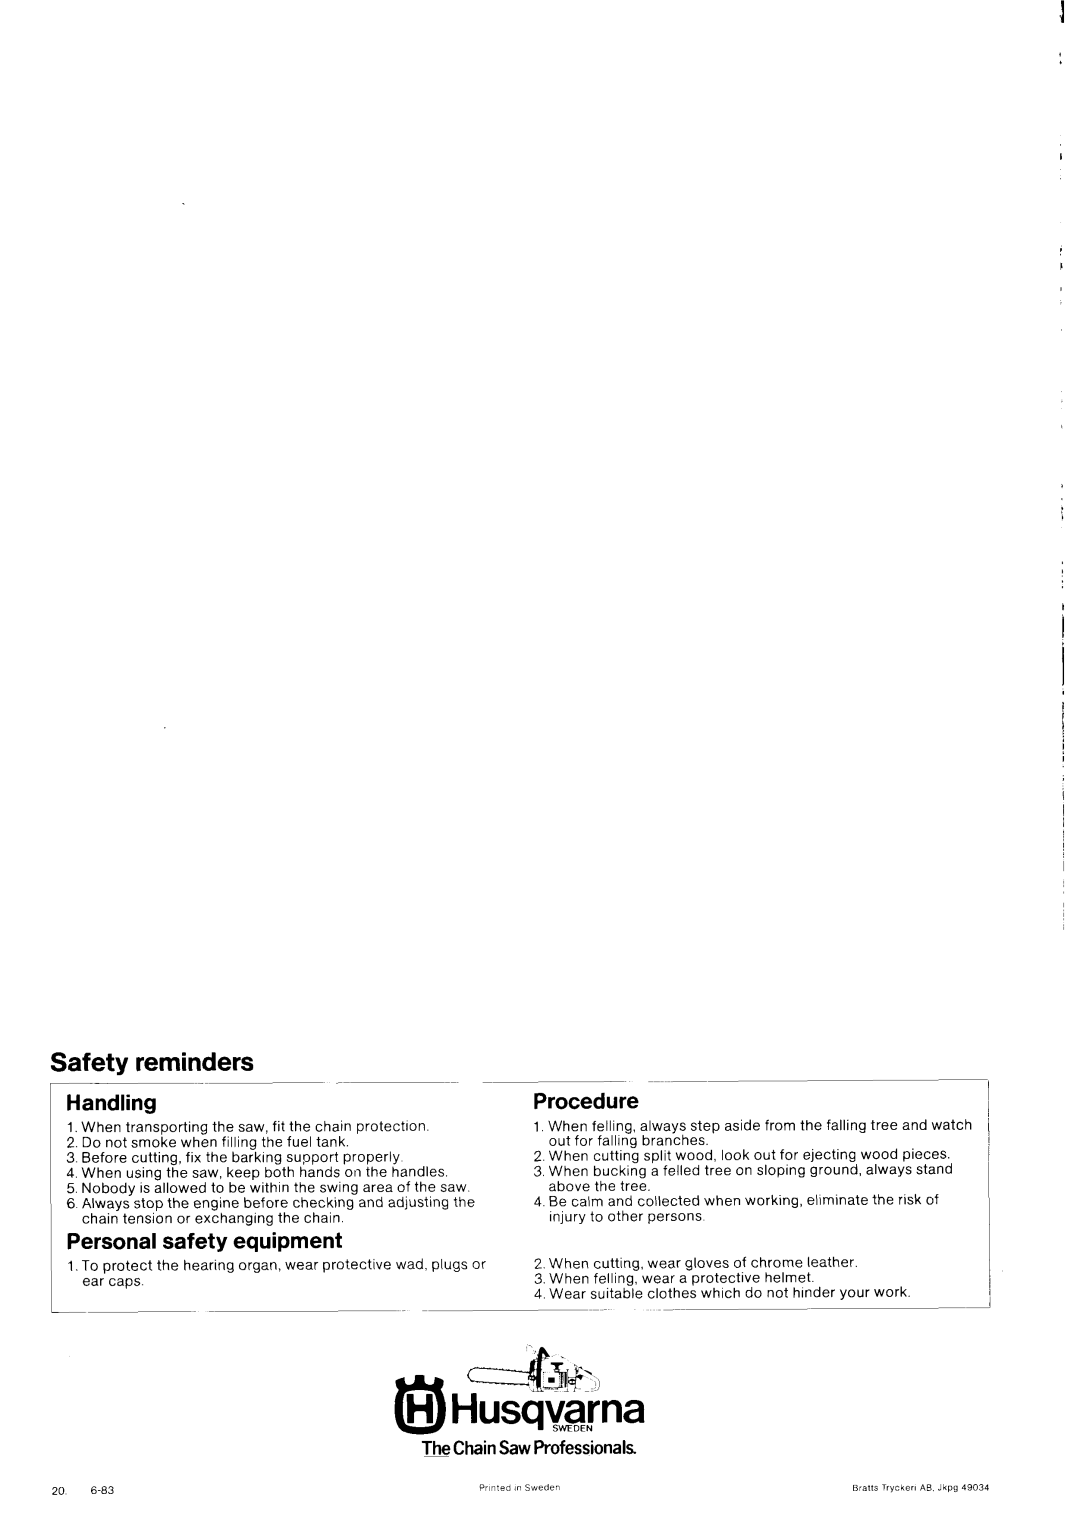 Husqvarna 266 manual Safety reminders, CzZI&iii, cH Husqvalna, Handling, Personal safety equipment, Procedure 